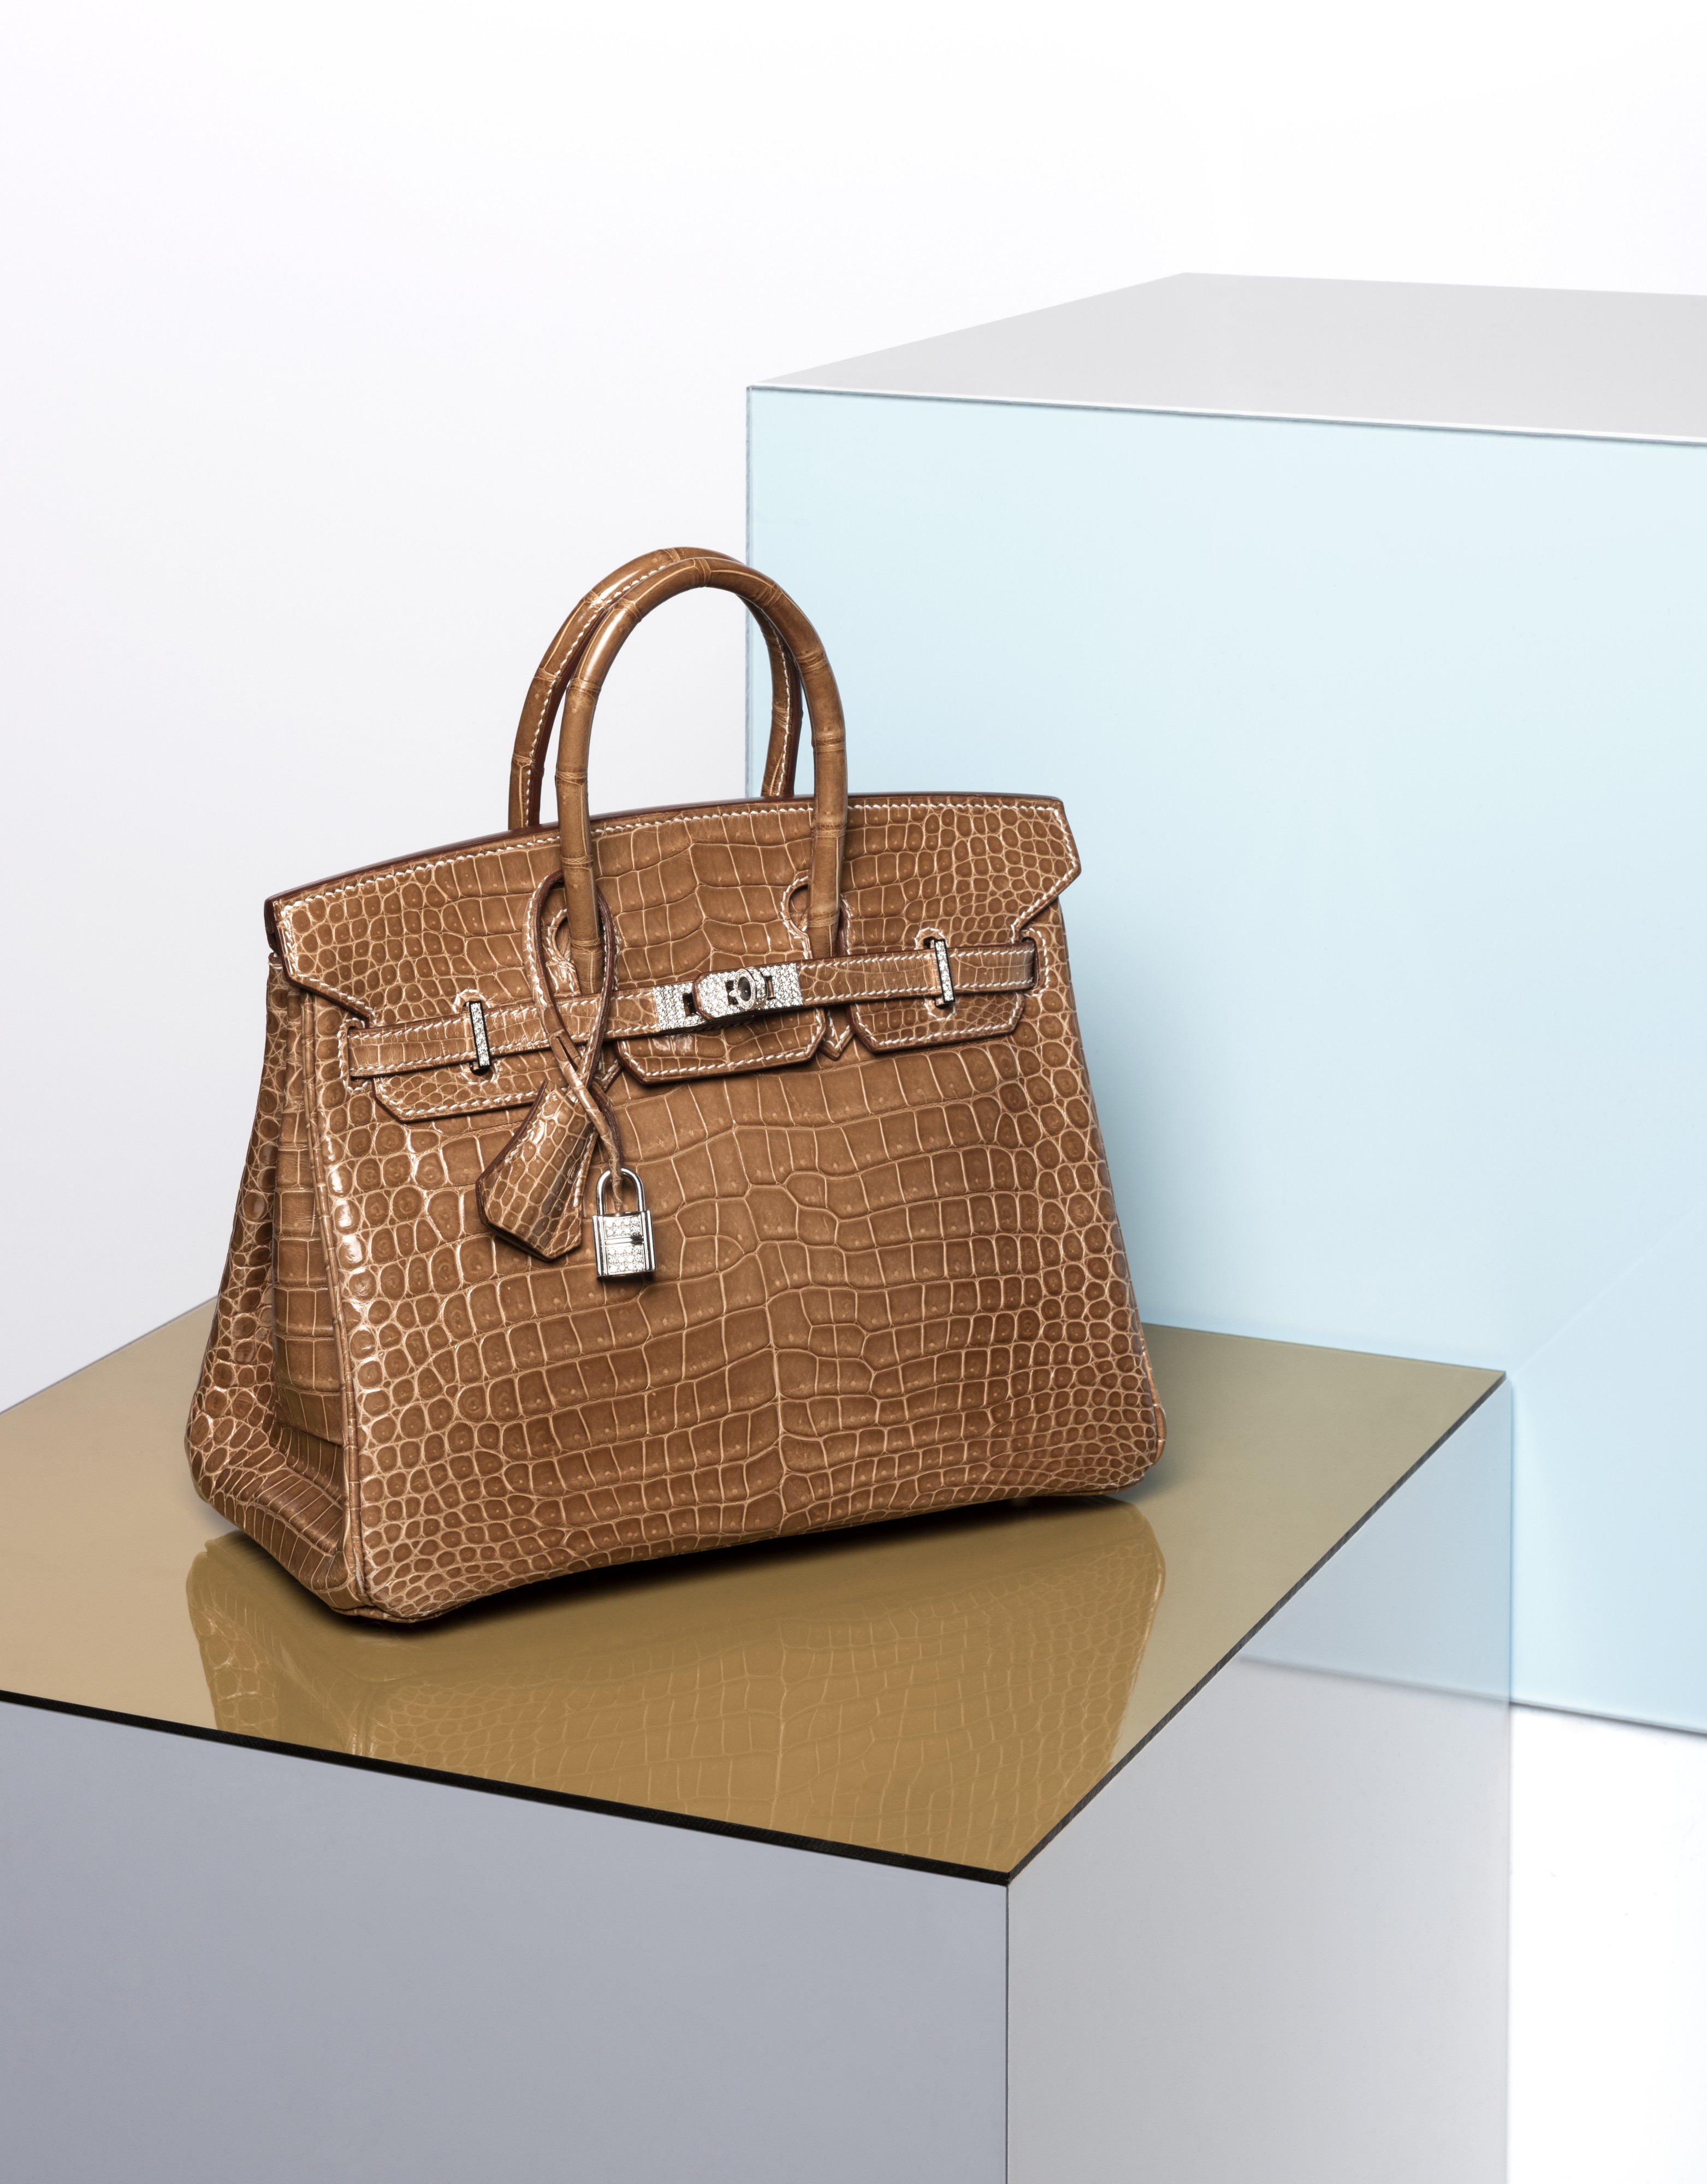 Christie's Handbags (@christieshandbags) • Instagram photos and videos